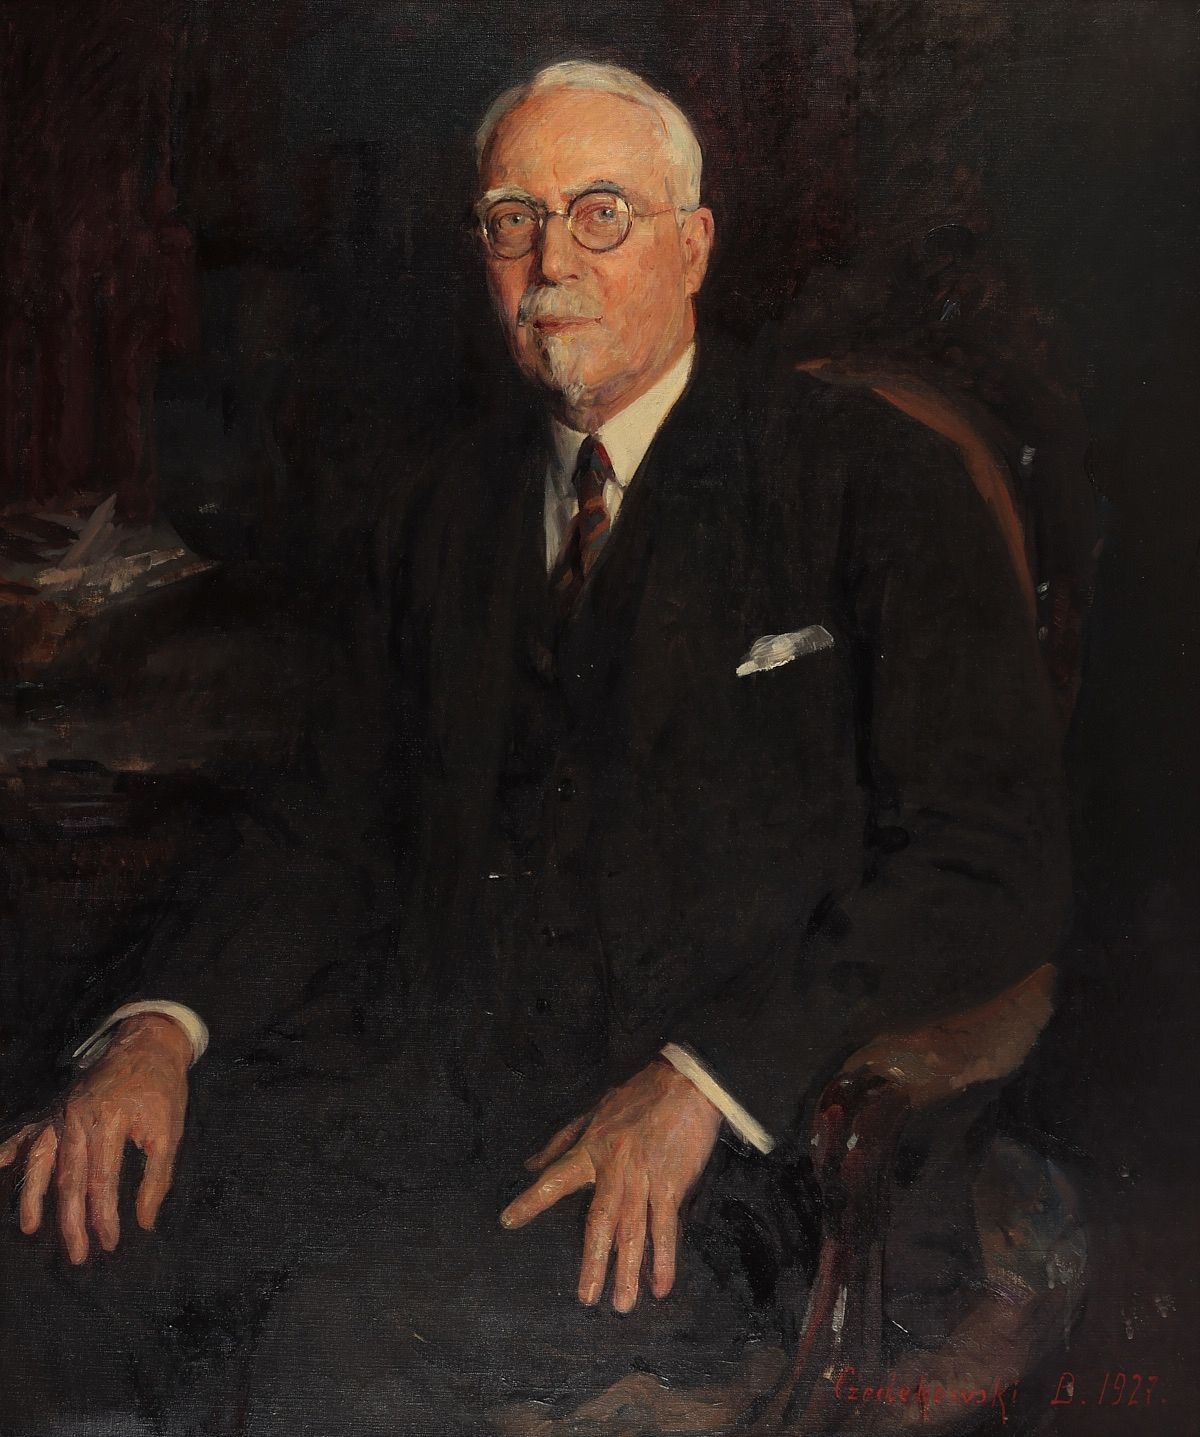 A portrait of Francis A. Chamberlain by Jan Boleslaw Czedekowski, circa 1927